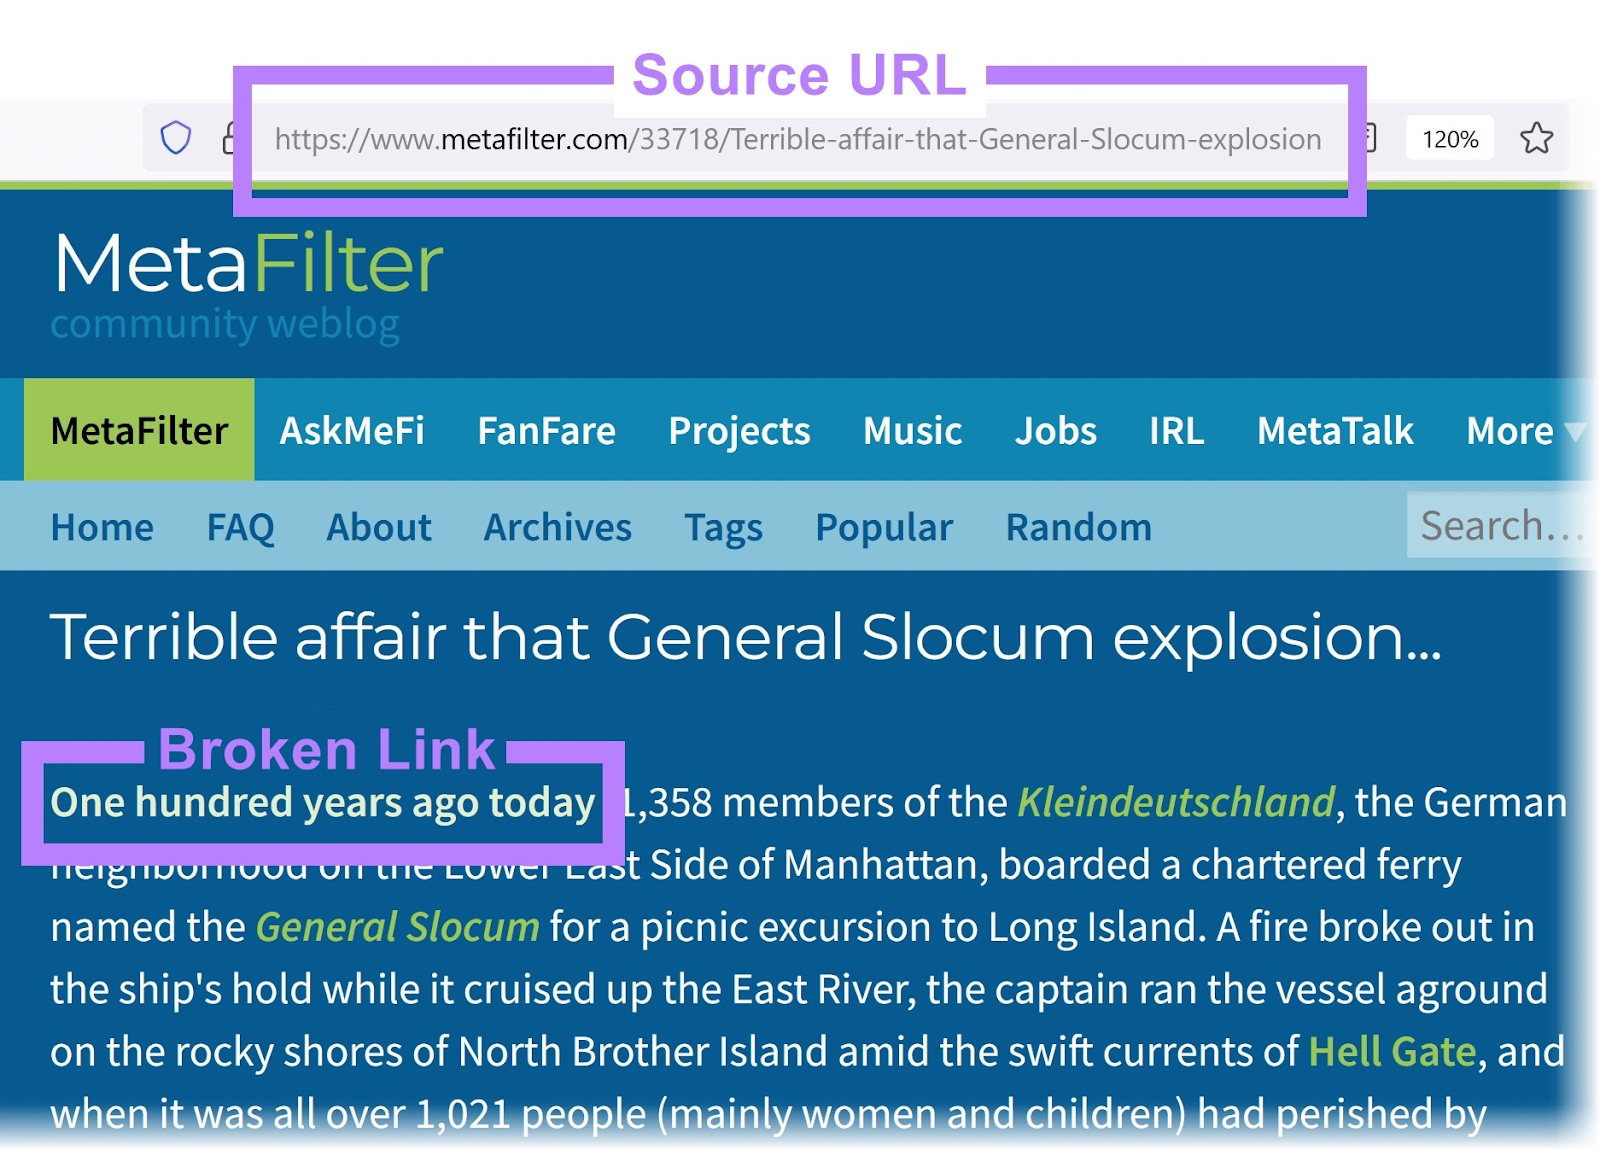 broken link highlighted in opened source URL